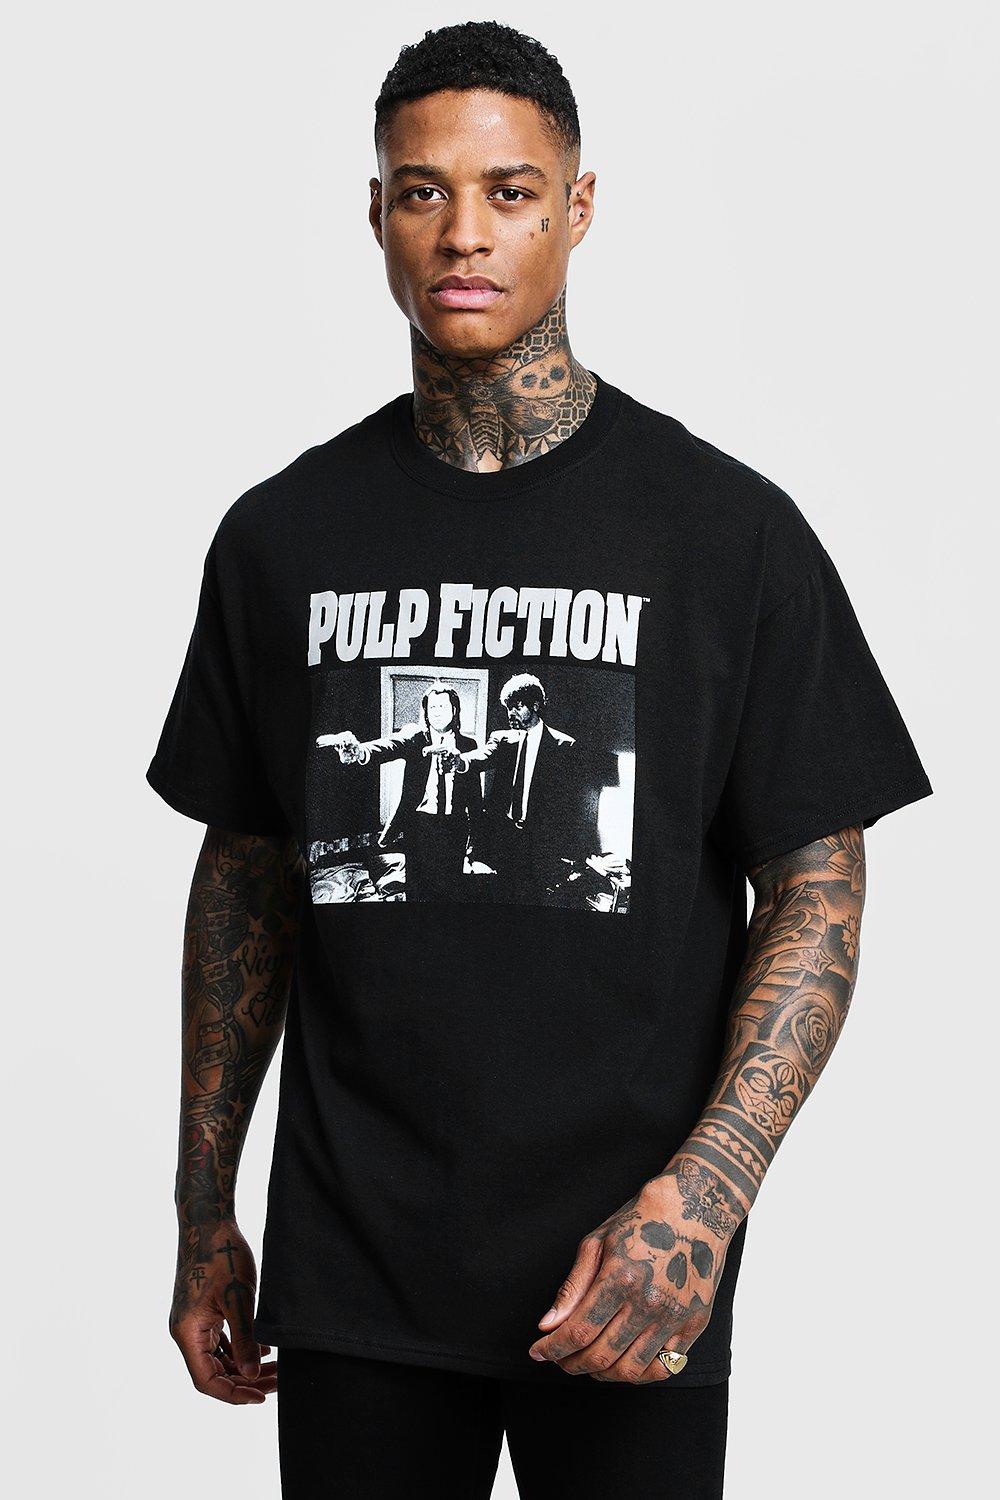 Pulp fiction T-Shirt